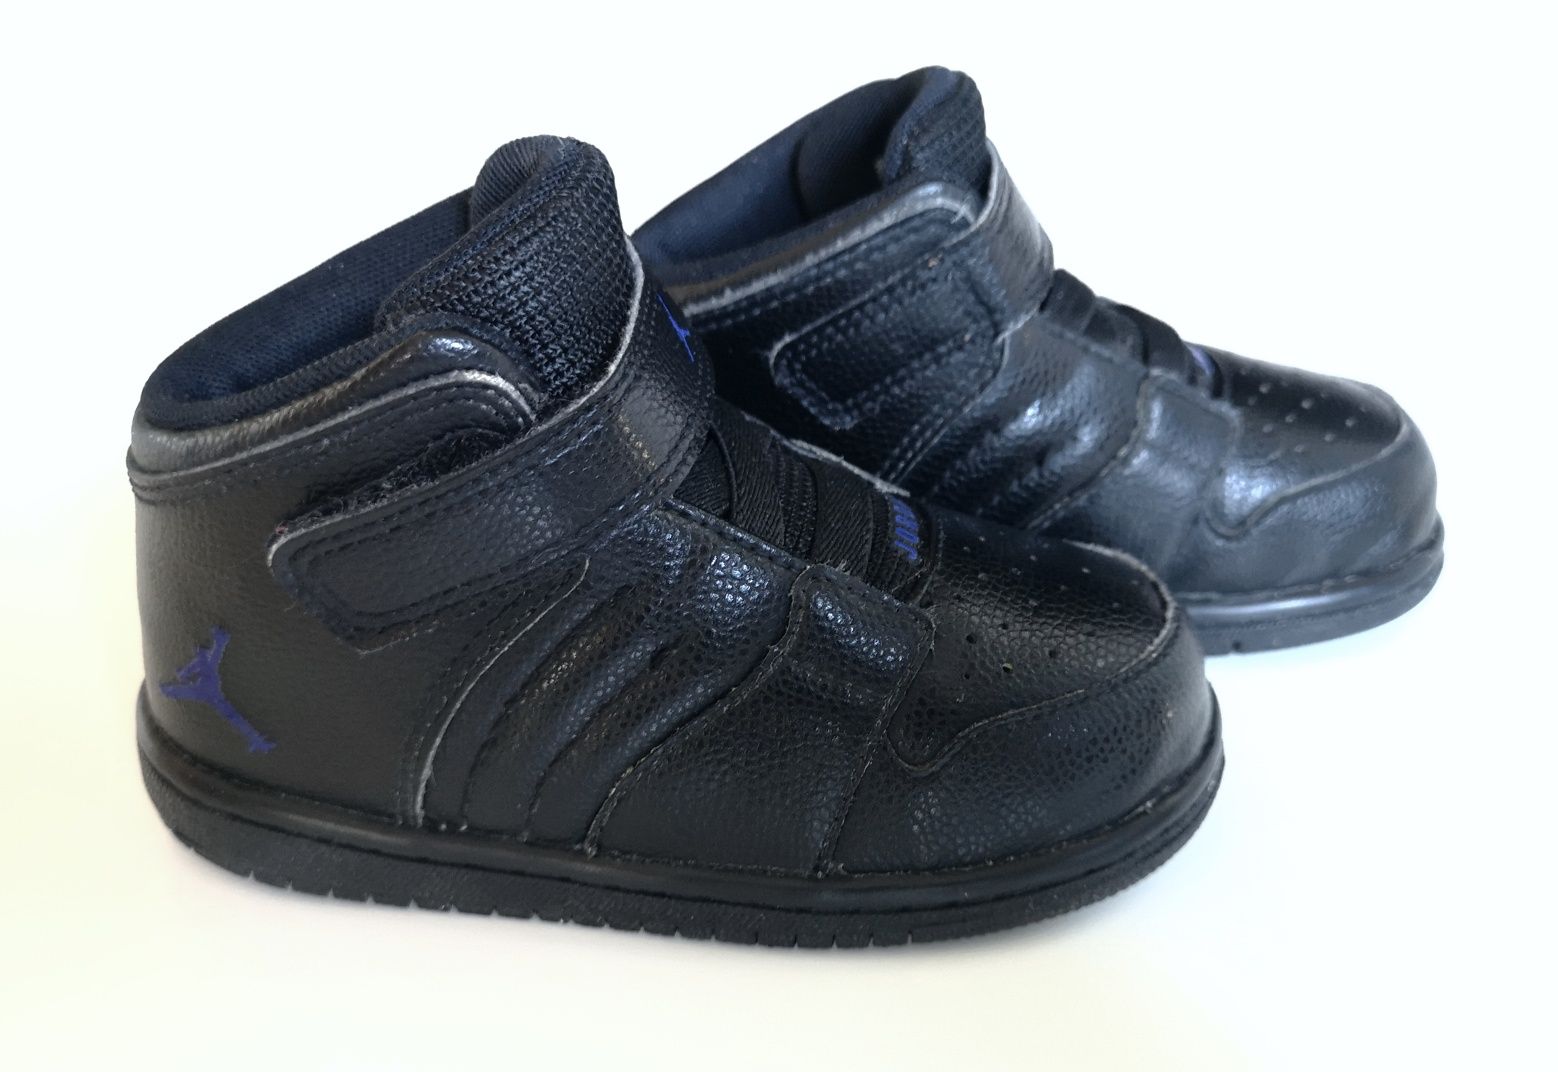 Czarne, skórzane buty sportowe Nike Jordan, rozmiar 25